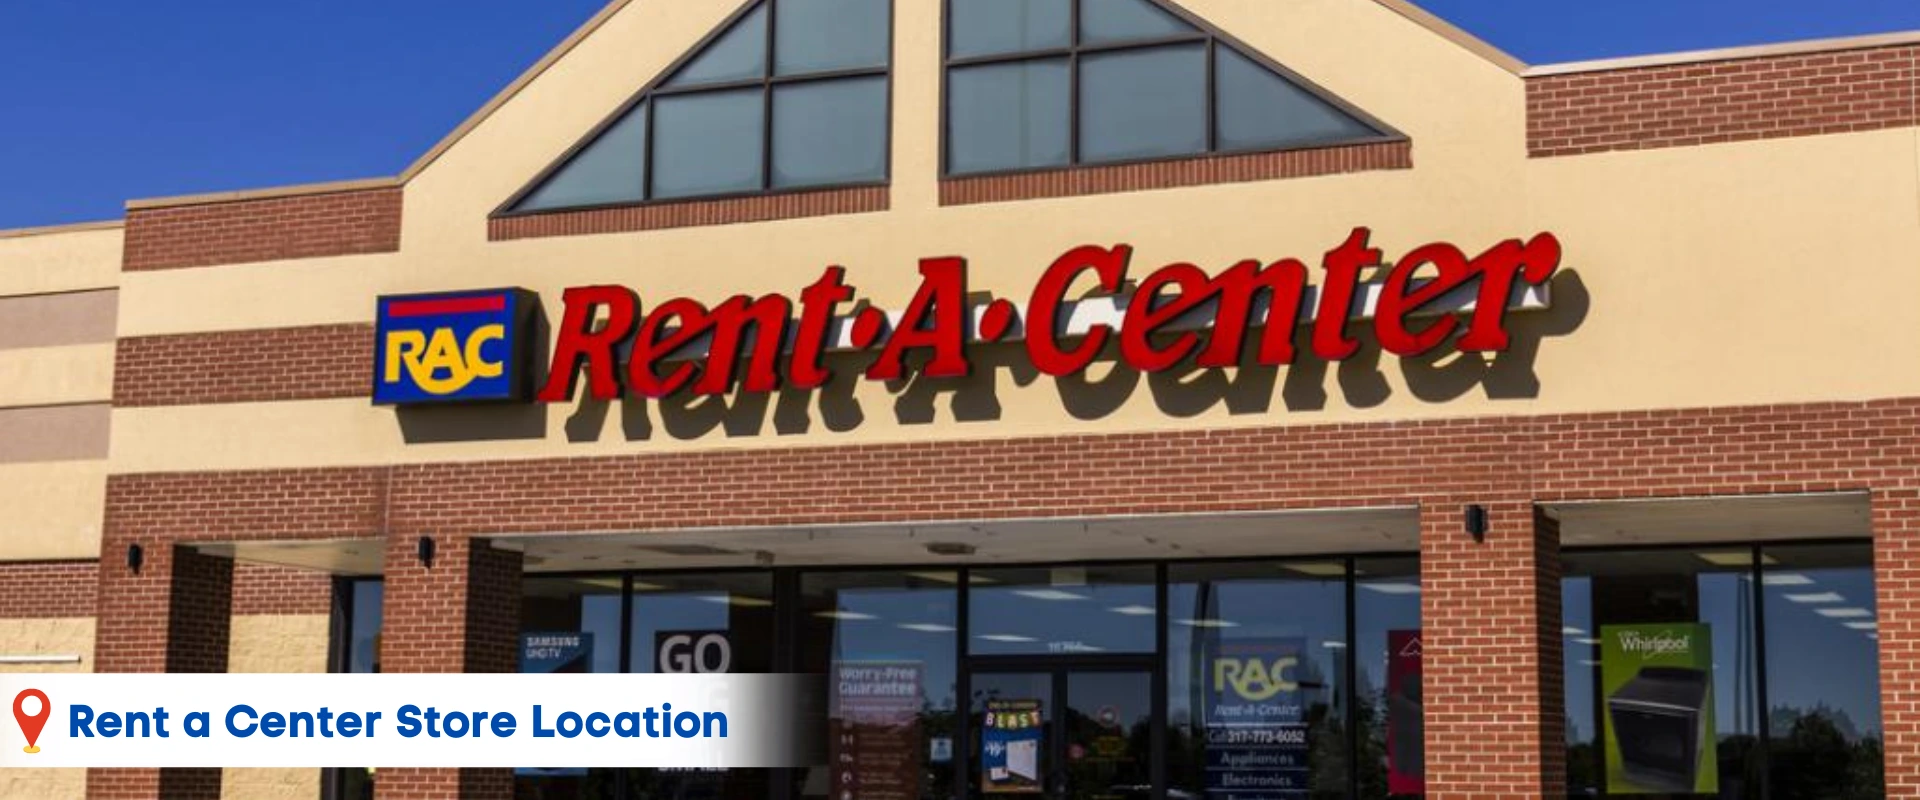 Rent a Center Near Me in Clinton Twp, MI.